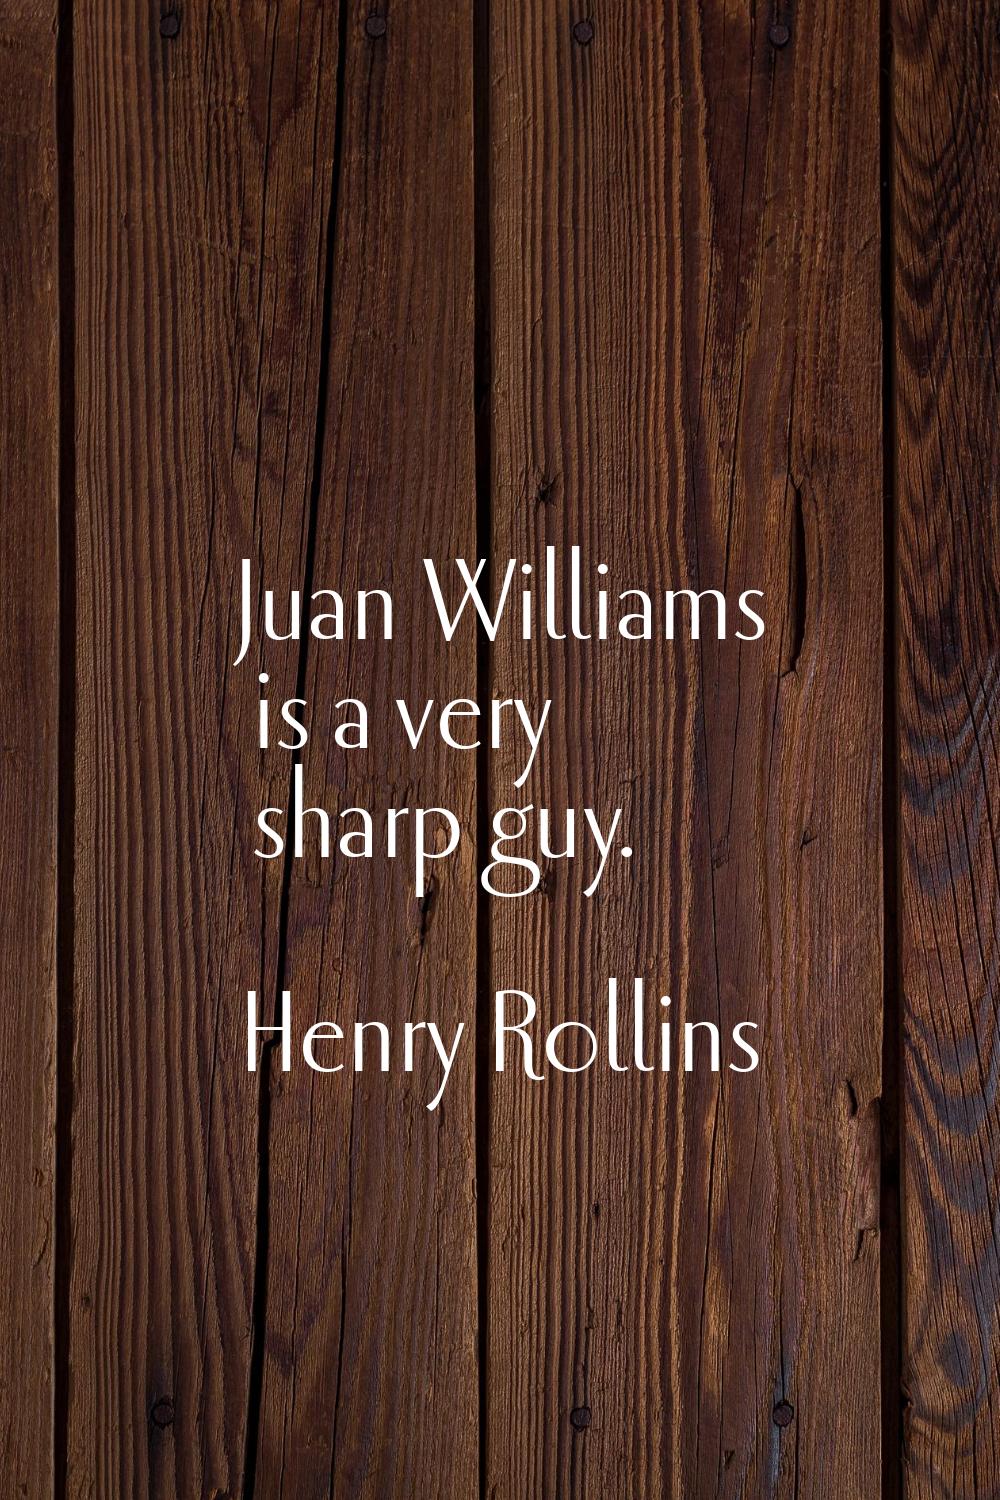 Juan Williams is a very sharp guy.